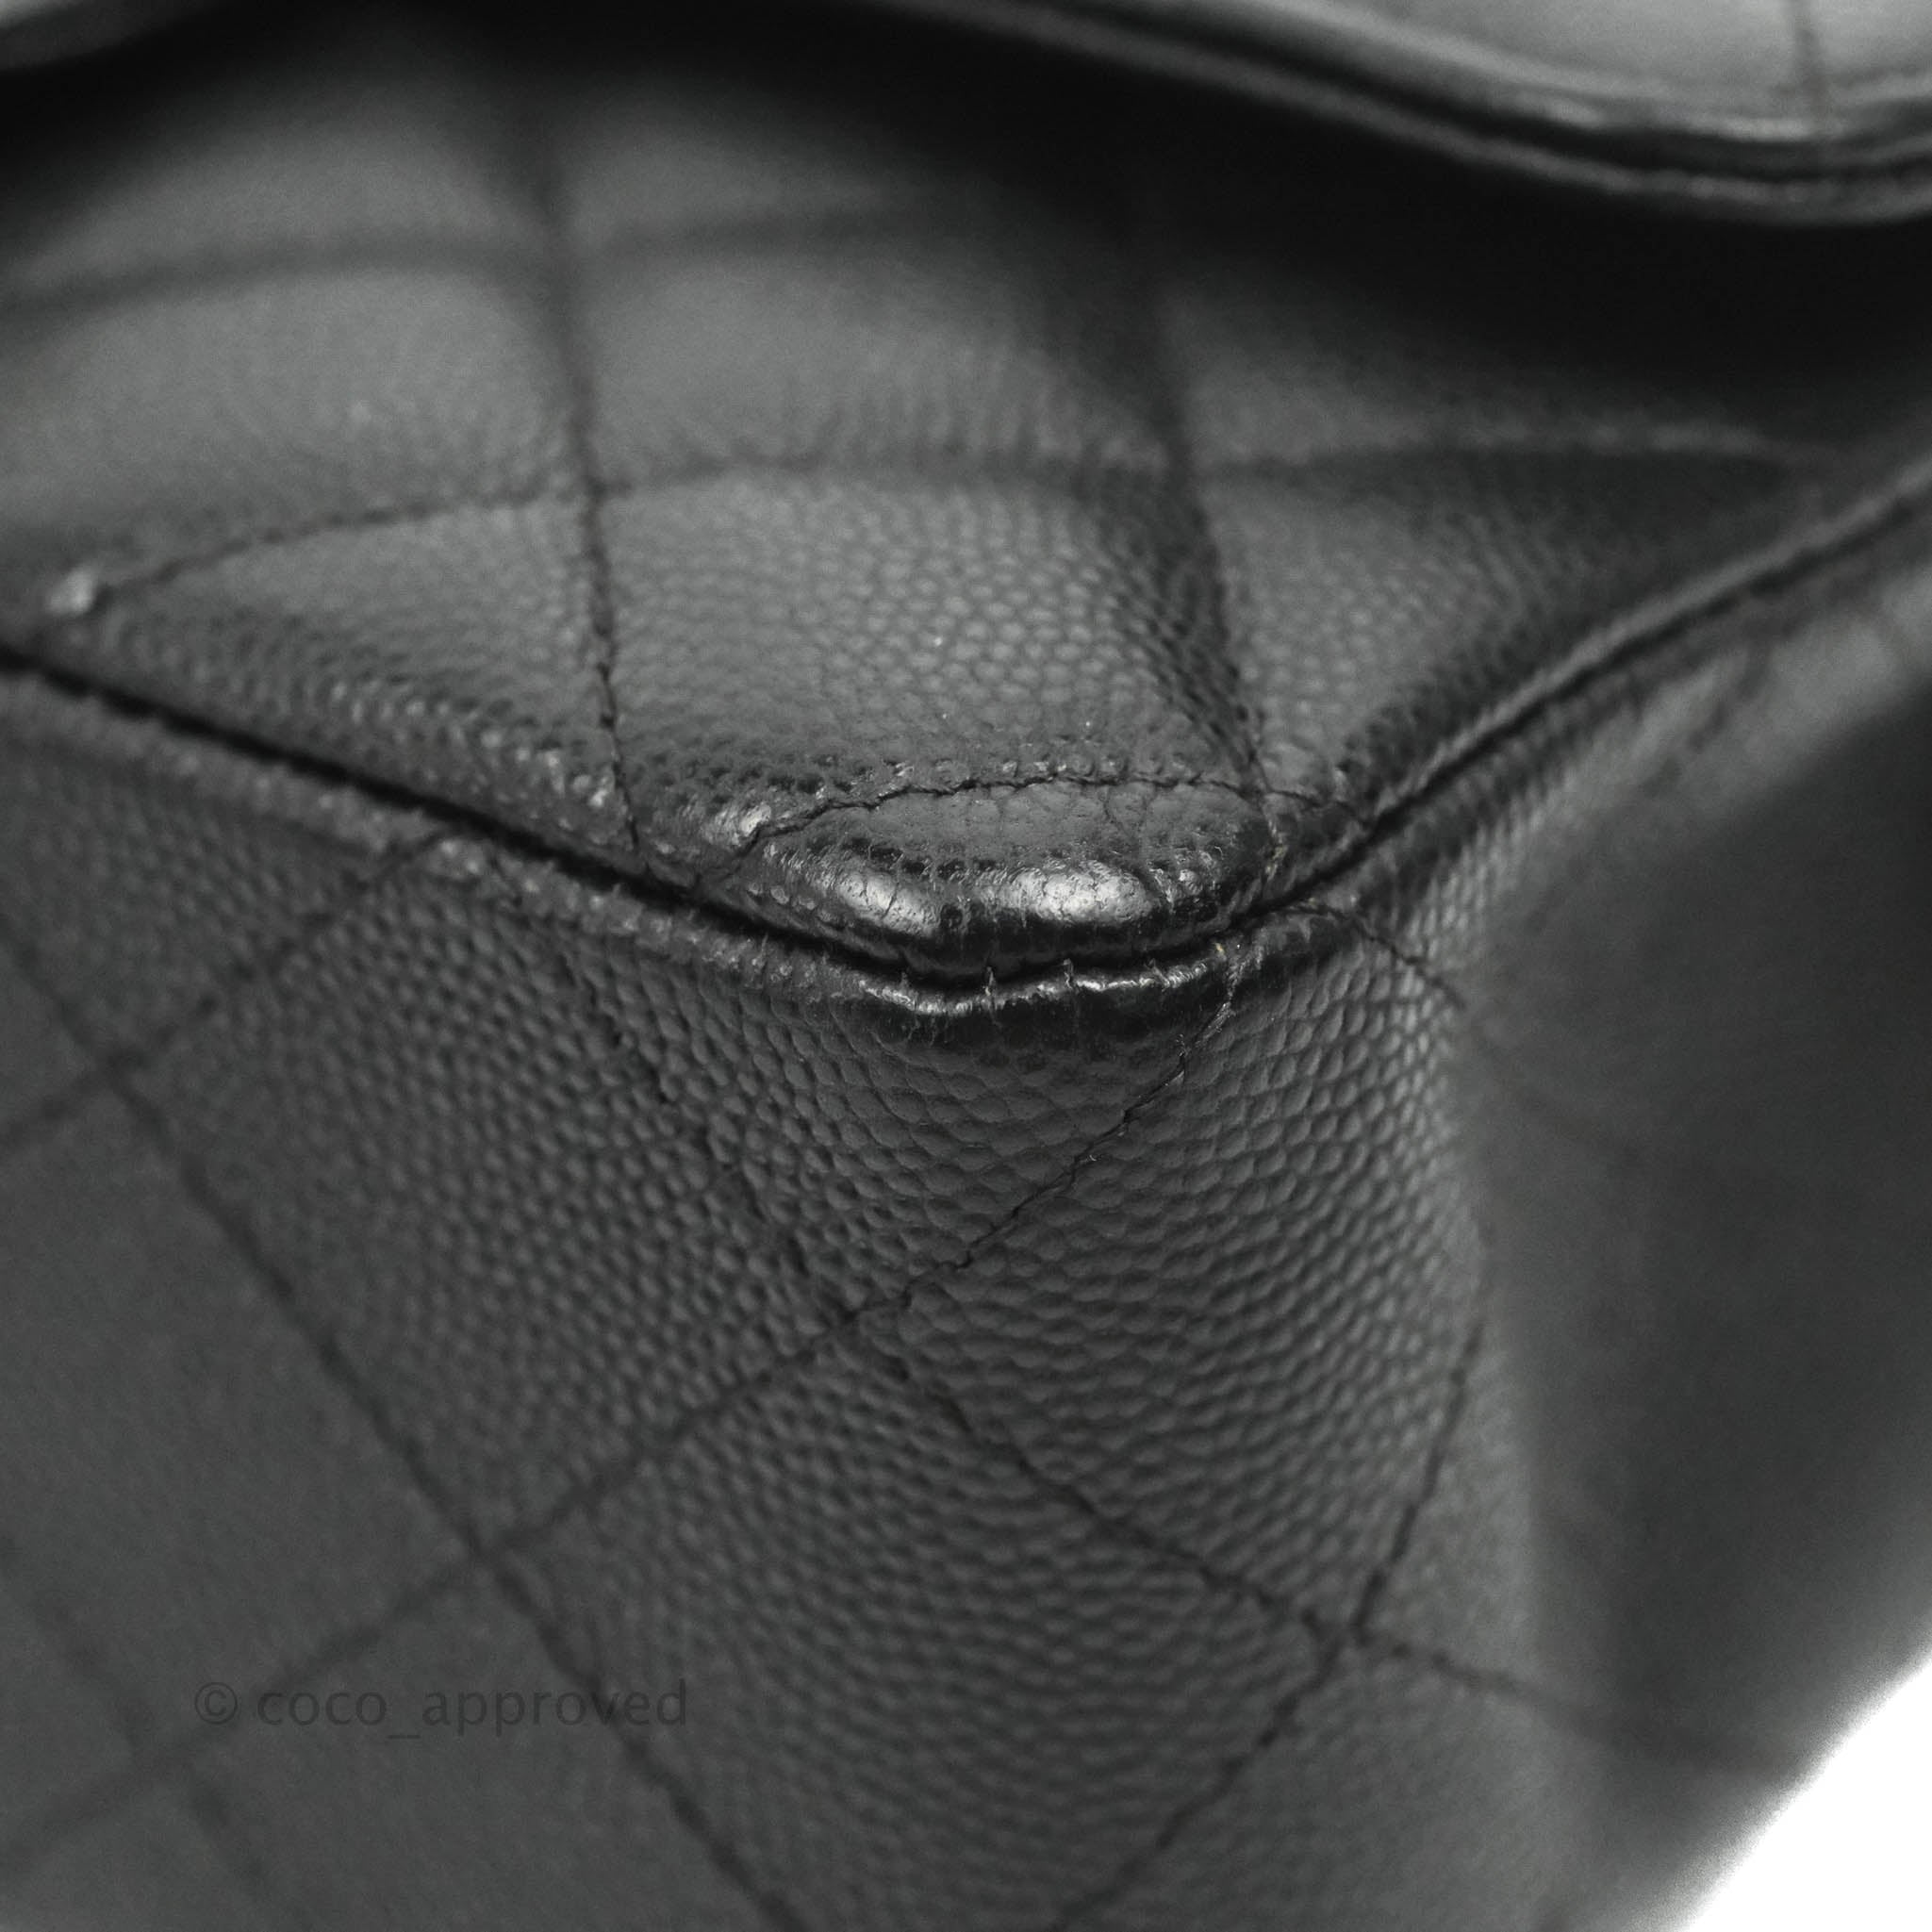 CHANEL, Bags, Chanel Black Rectangular Mini Flap 27c Caviar Rare